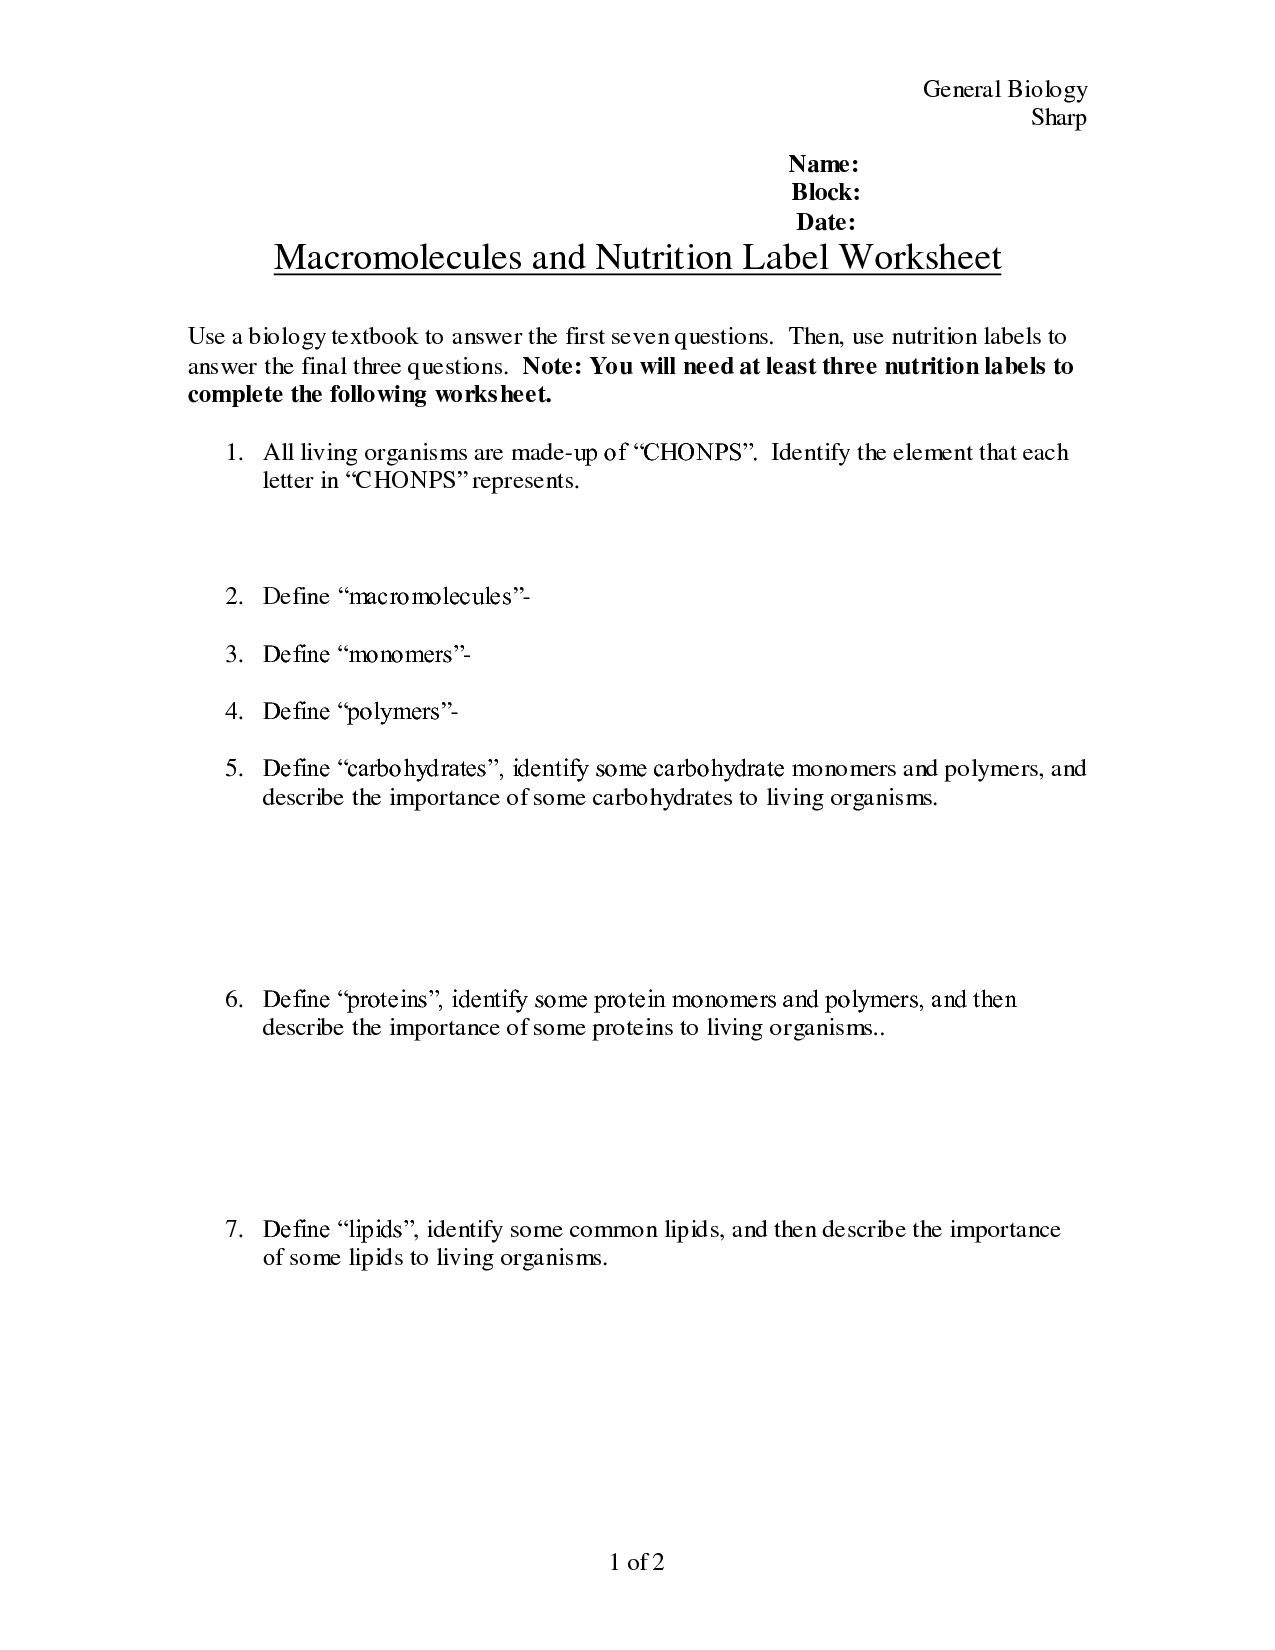 Label and Nutrition Worksheet Macromolecules